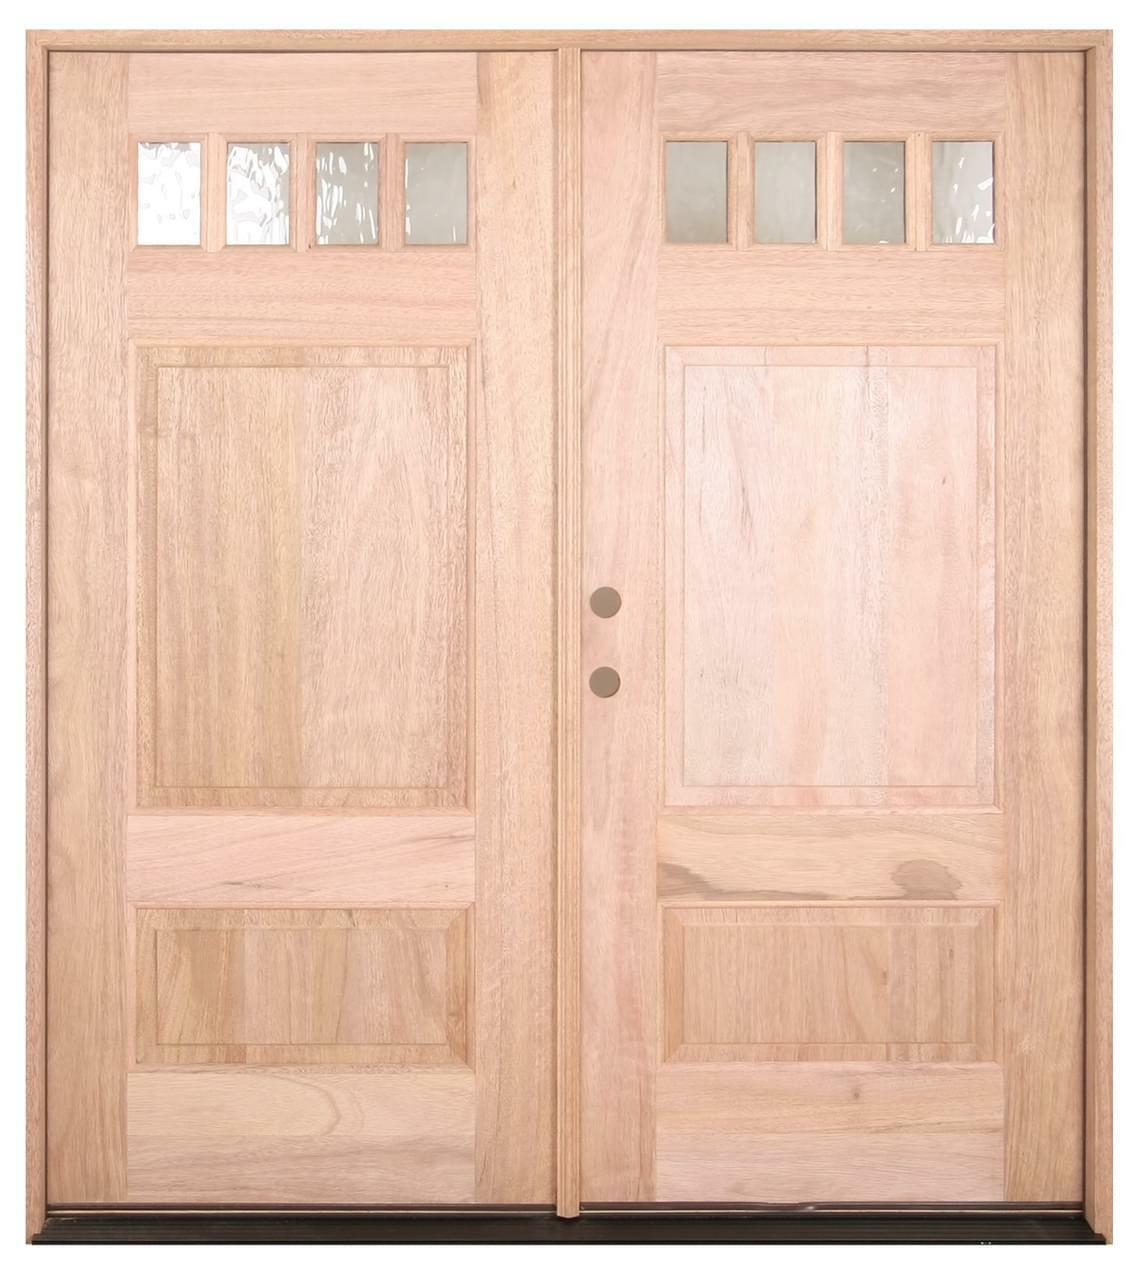 6 ft. x 6 ft. 8 in. Double 4 Lite Craftsman Exterior Mahogany Door Main Layout Photo